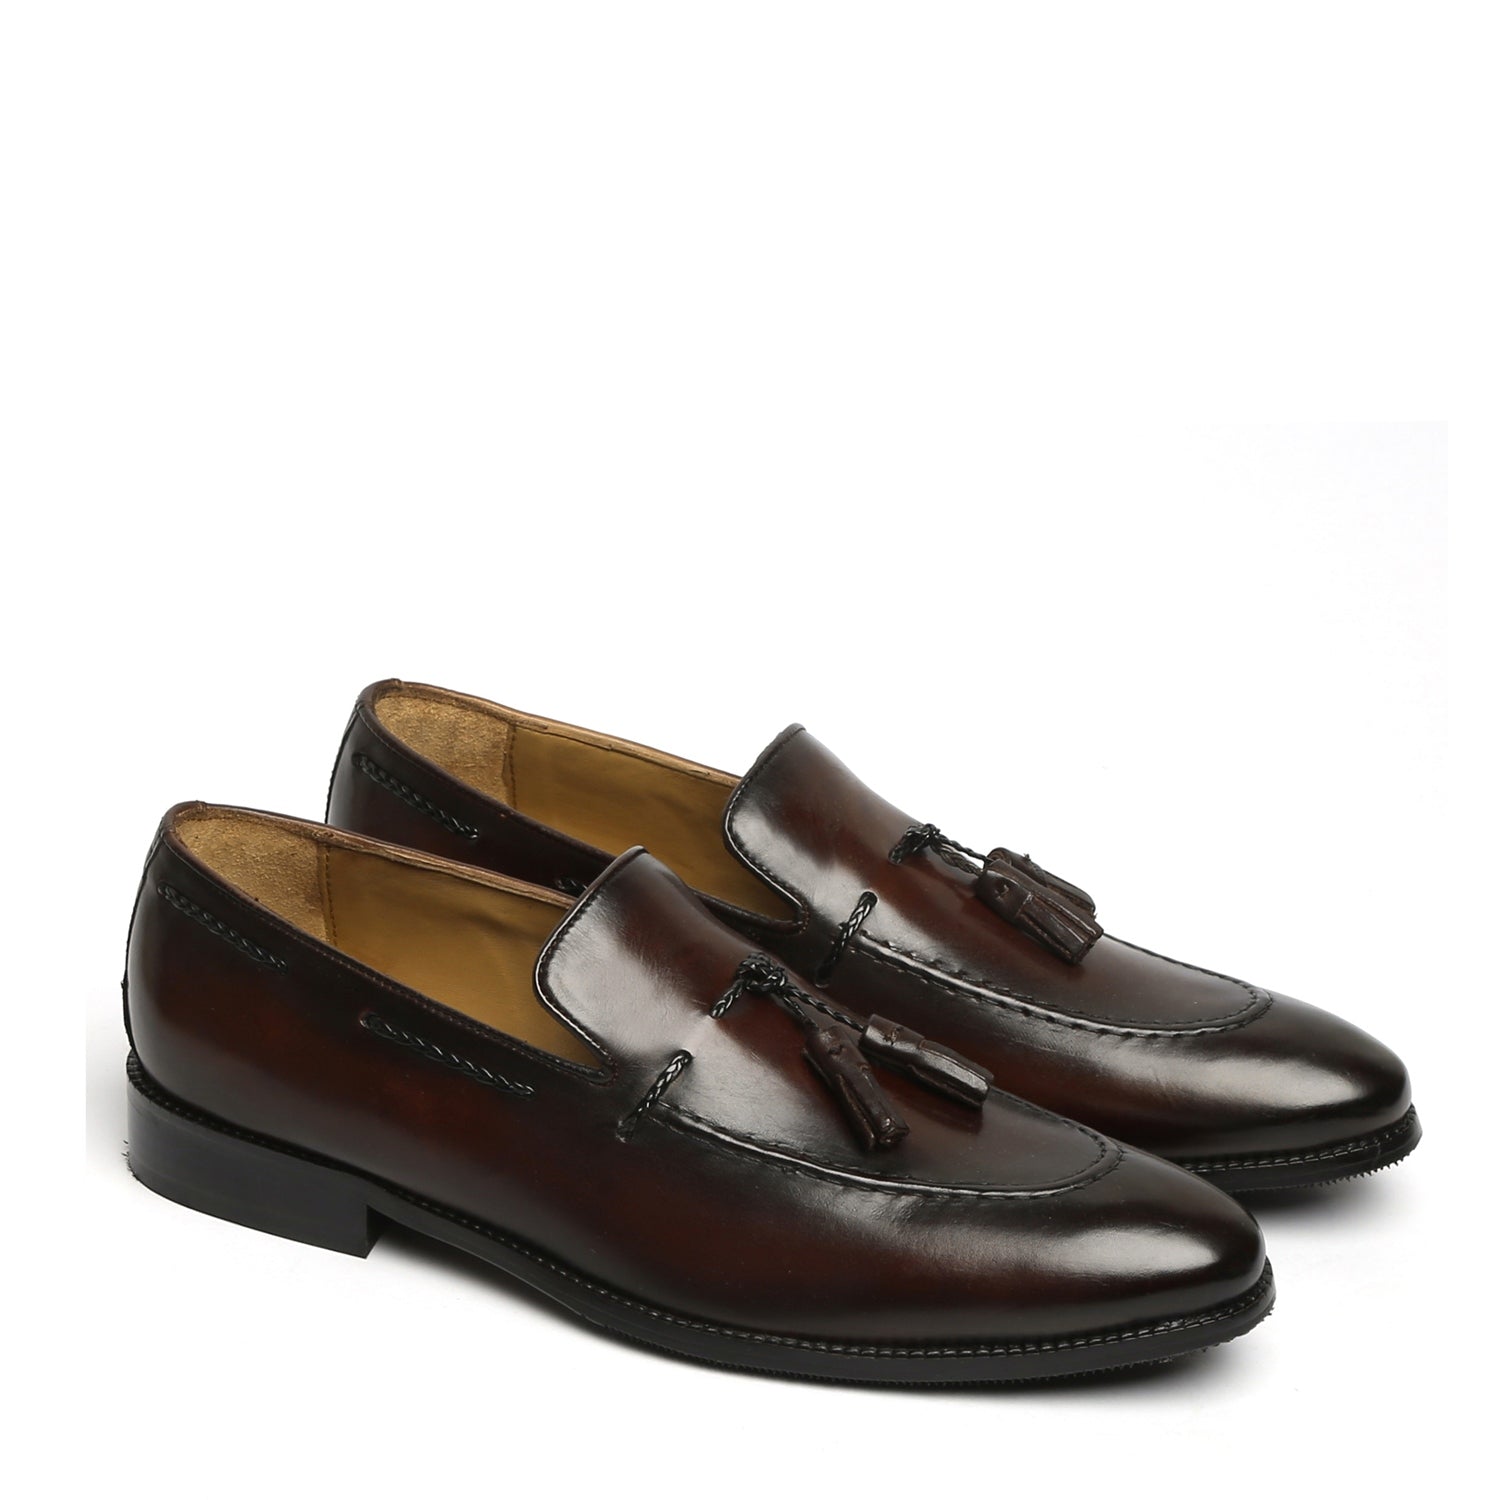 Dark Brown Loafers with Side Lacing Tassel Design in Genuine Leather By Brune & Bareskin